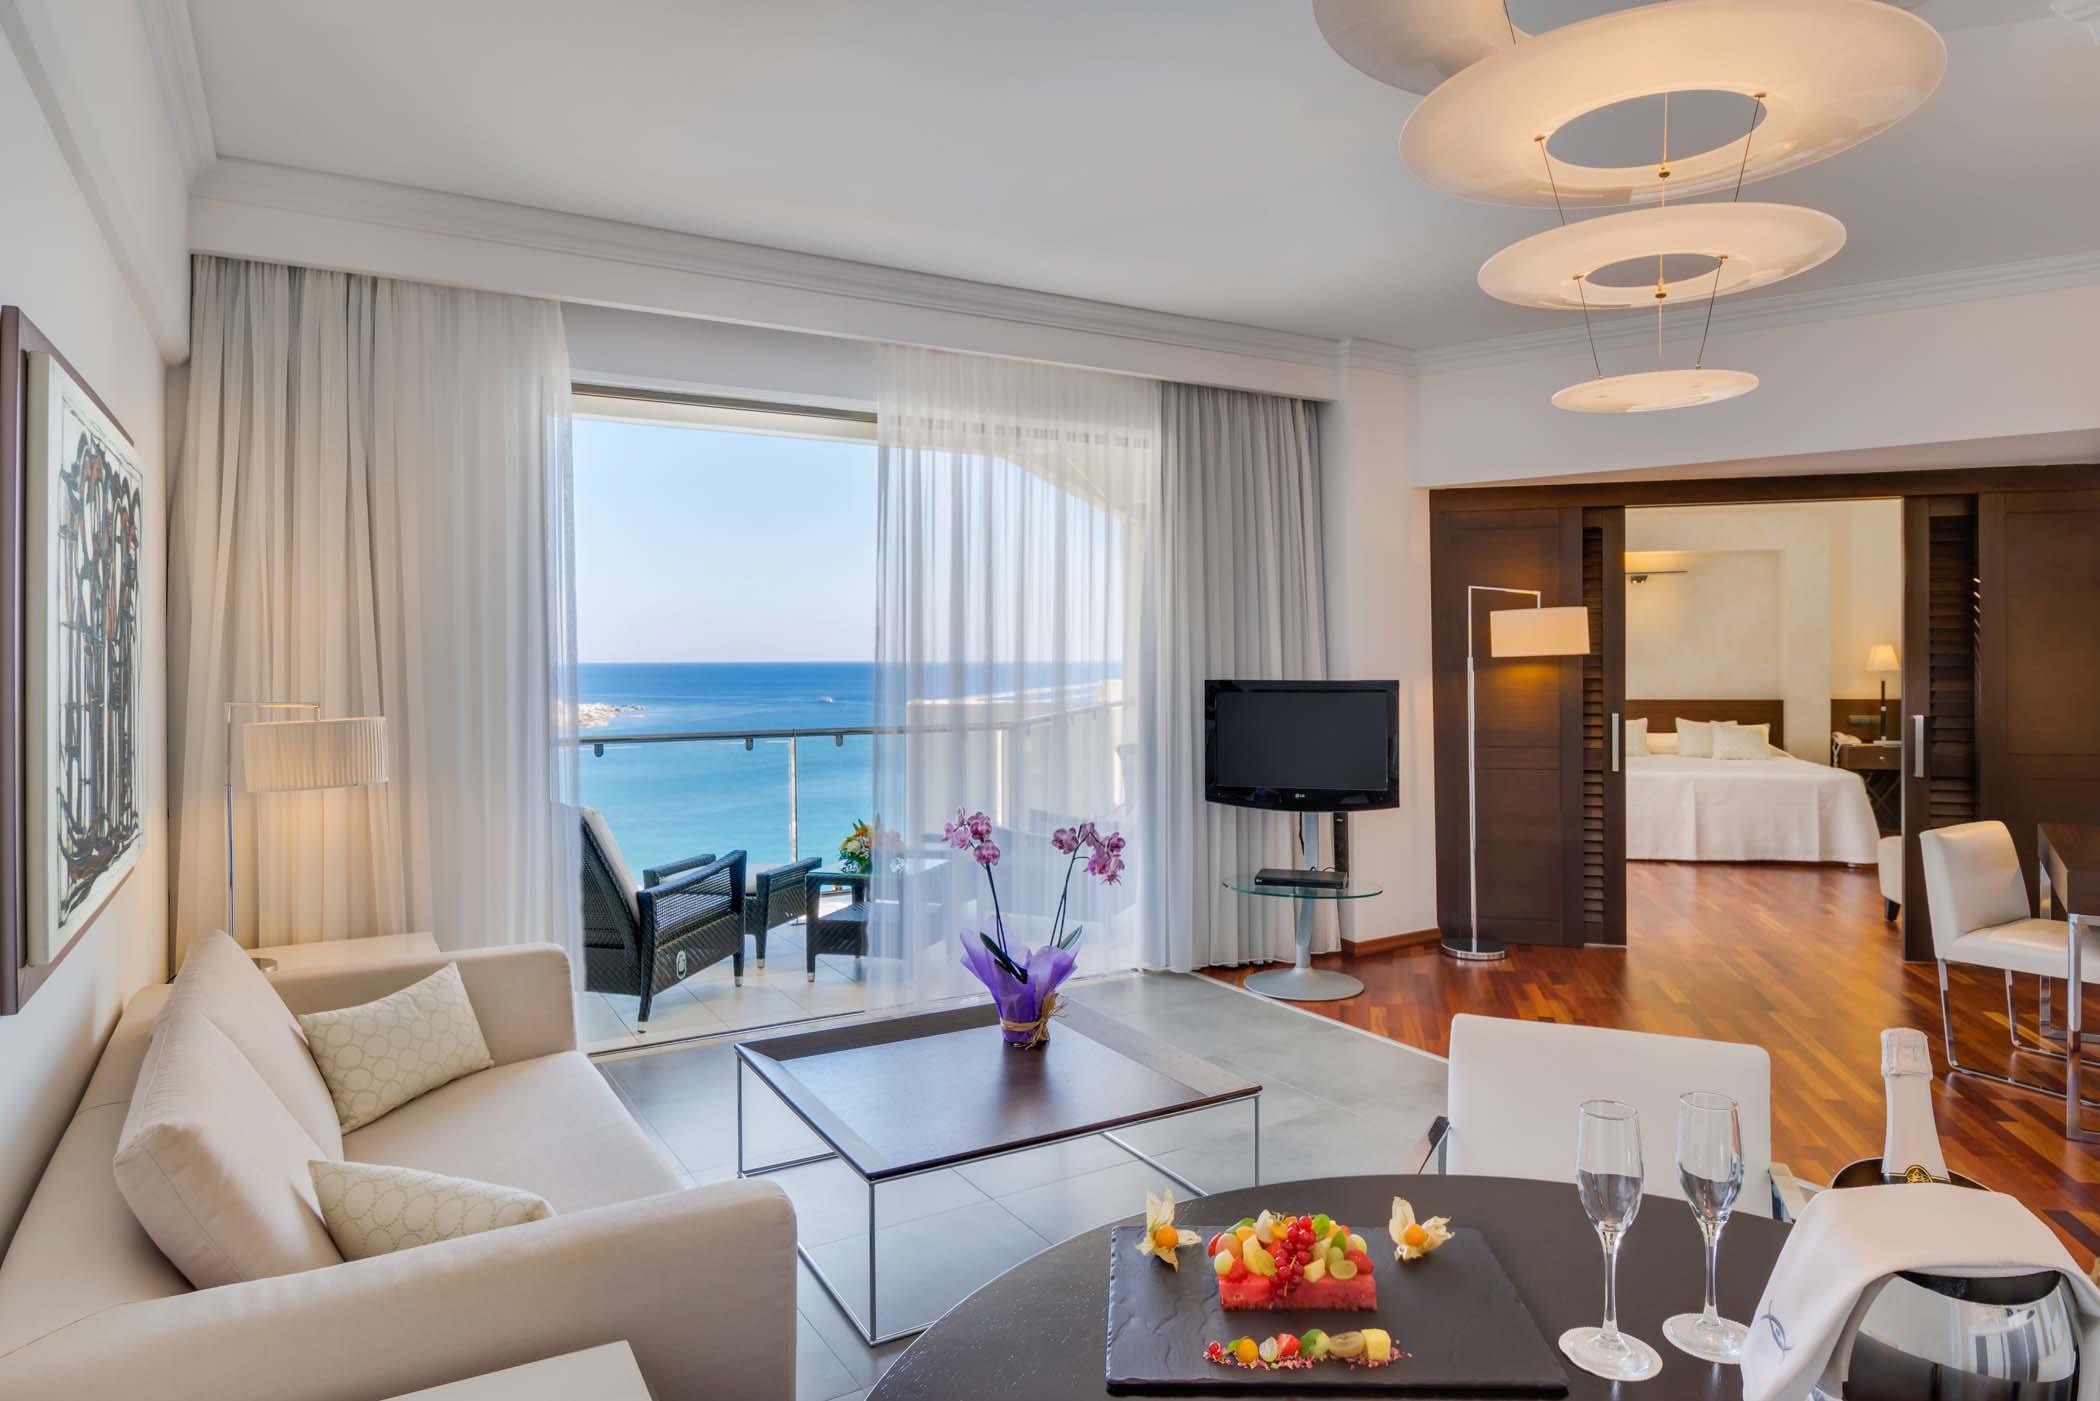 Сочи отель 5 на берегу. Elite Luxury Suite & Spa 5*. Elysium Resort & Spa 5*. Гостиная с видом на море. Номер отеля с видом на море.